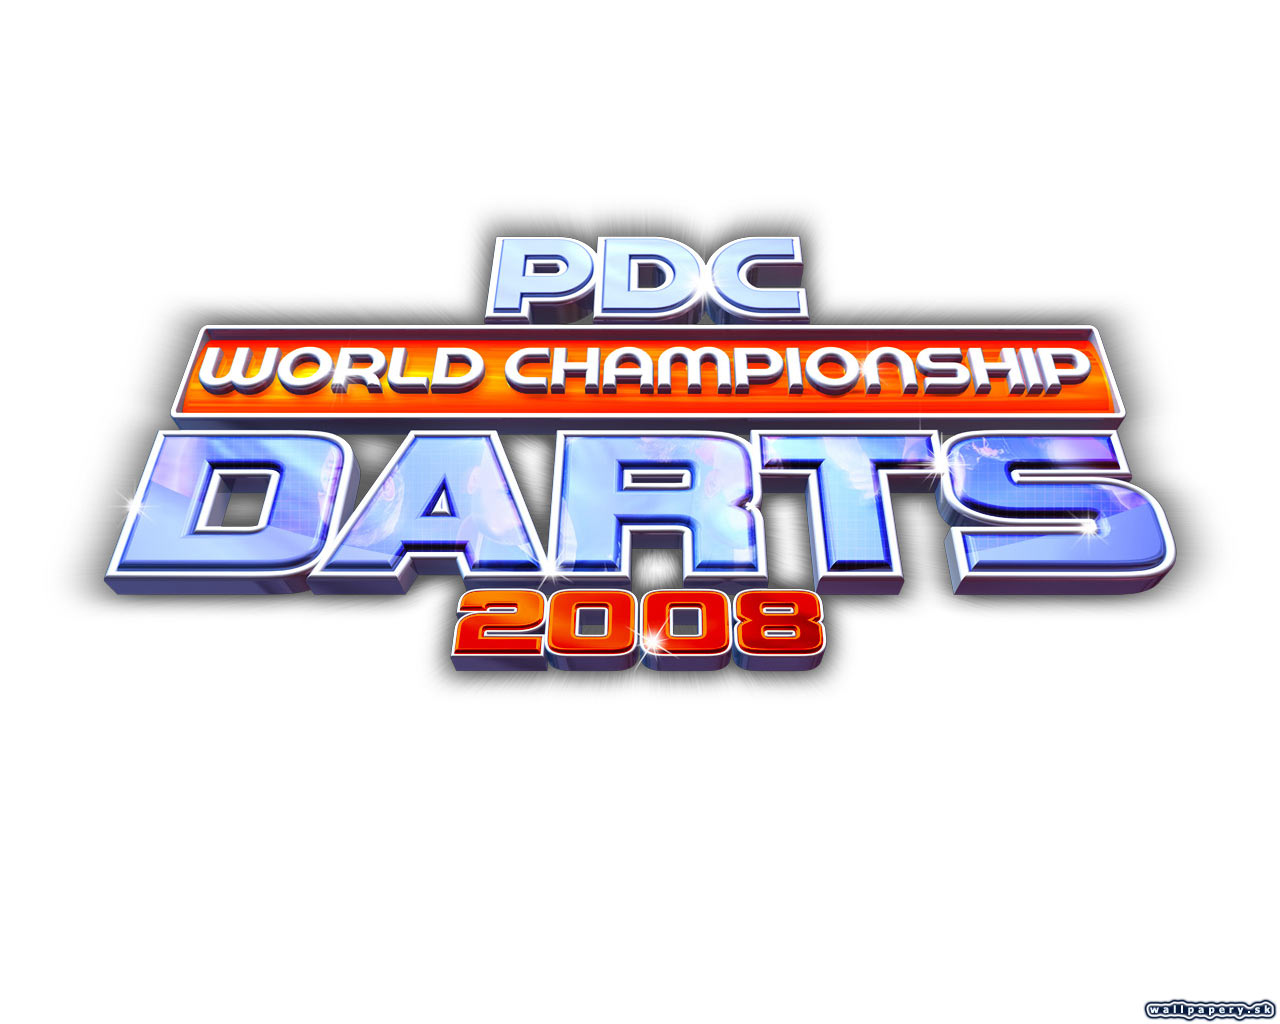 PDC World Championship Darts 2008 - wallpaper 1